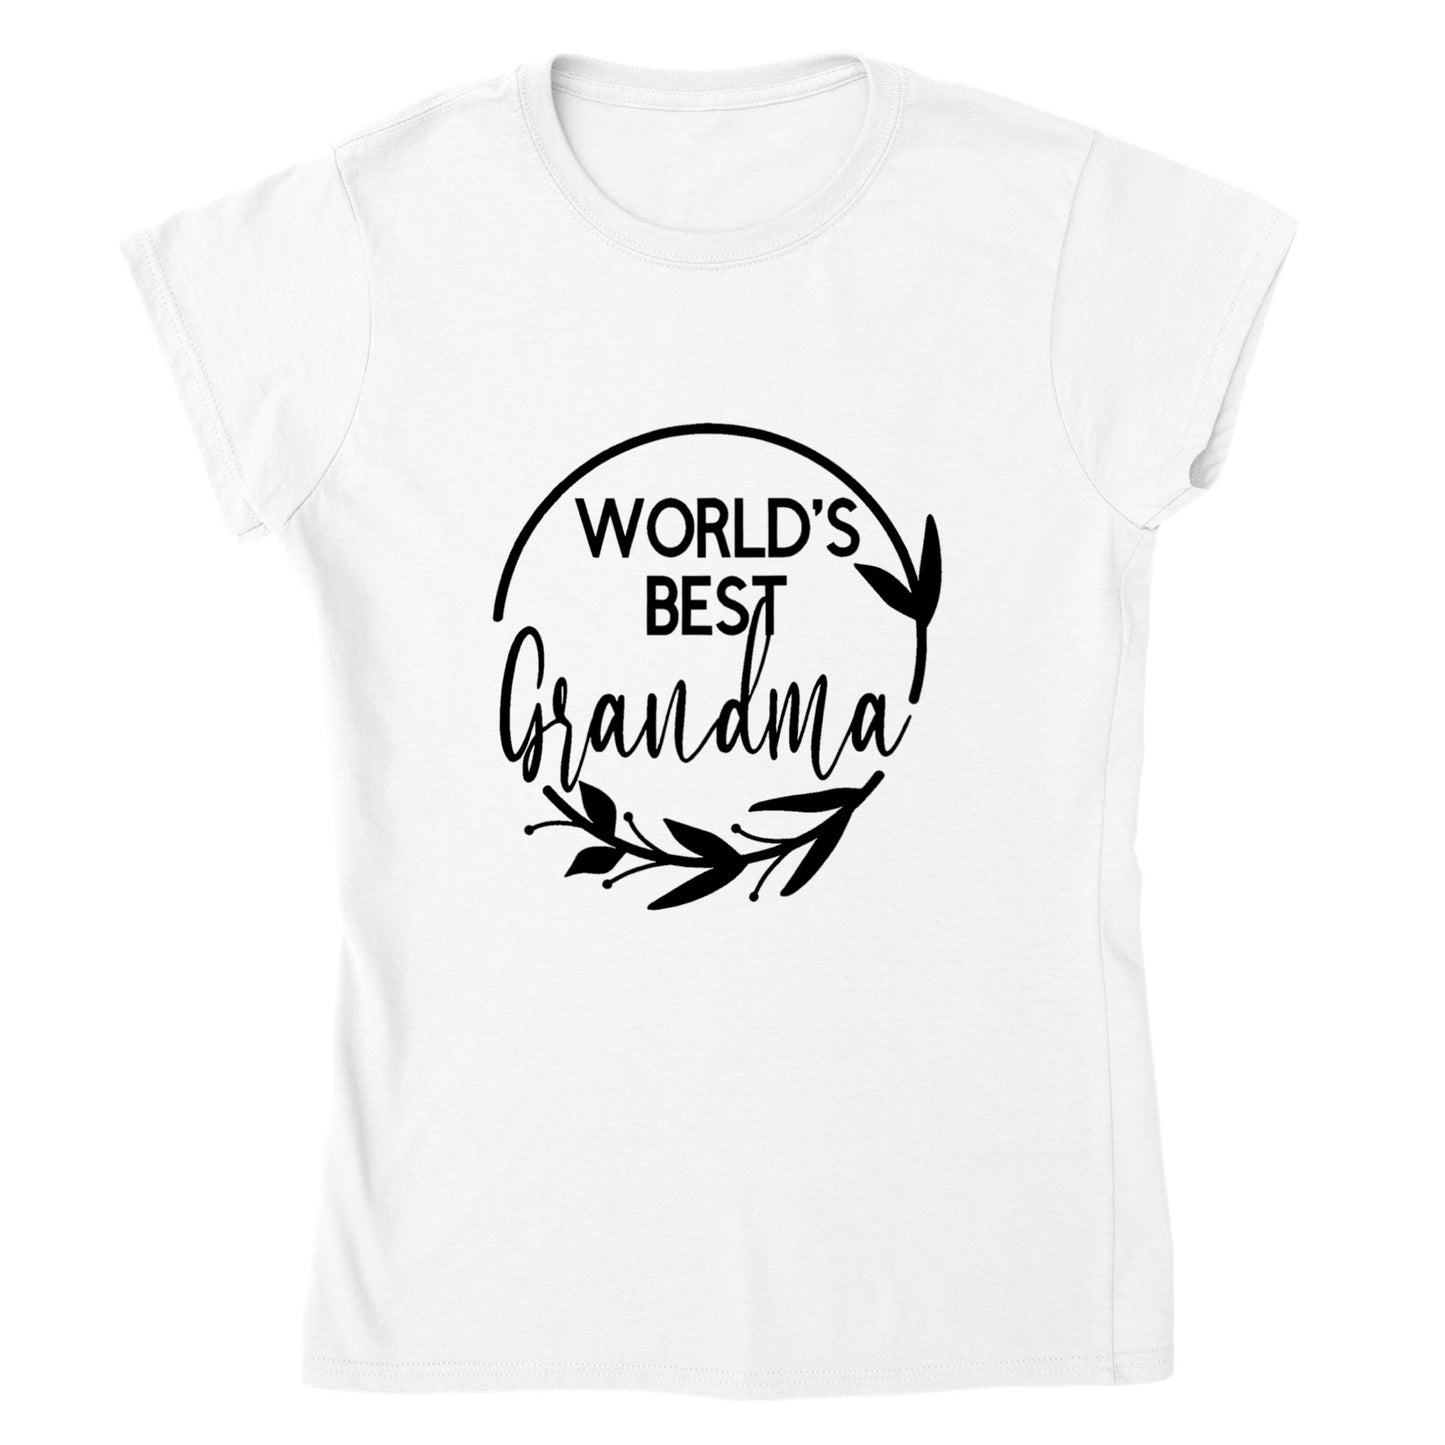 World's Best Grandma T-shirt